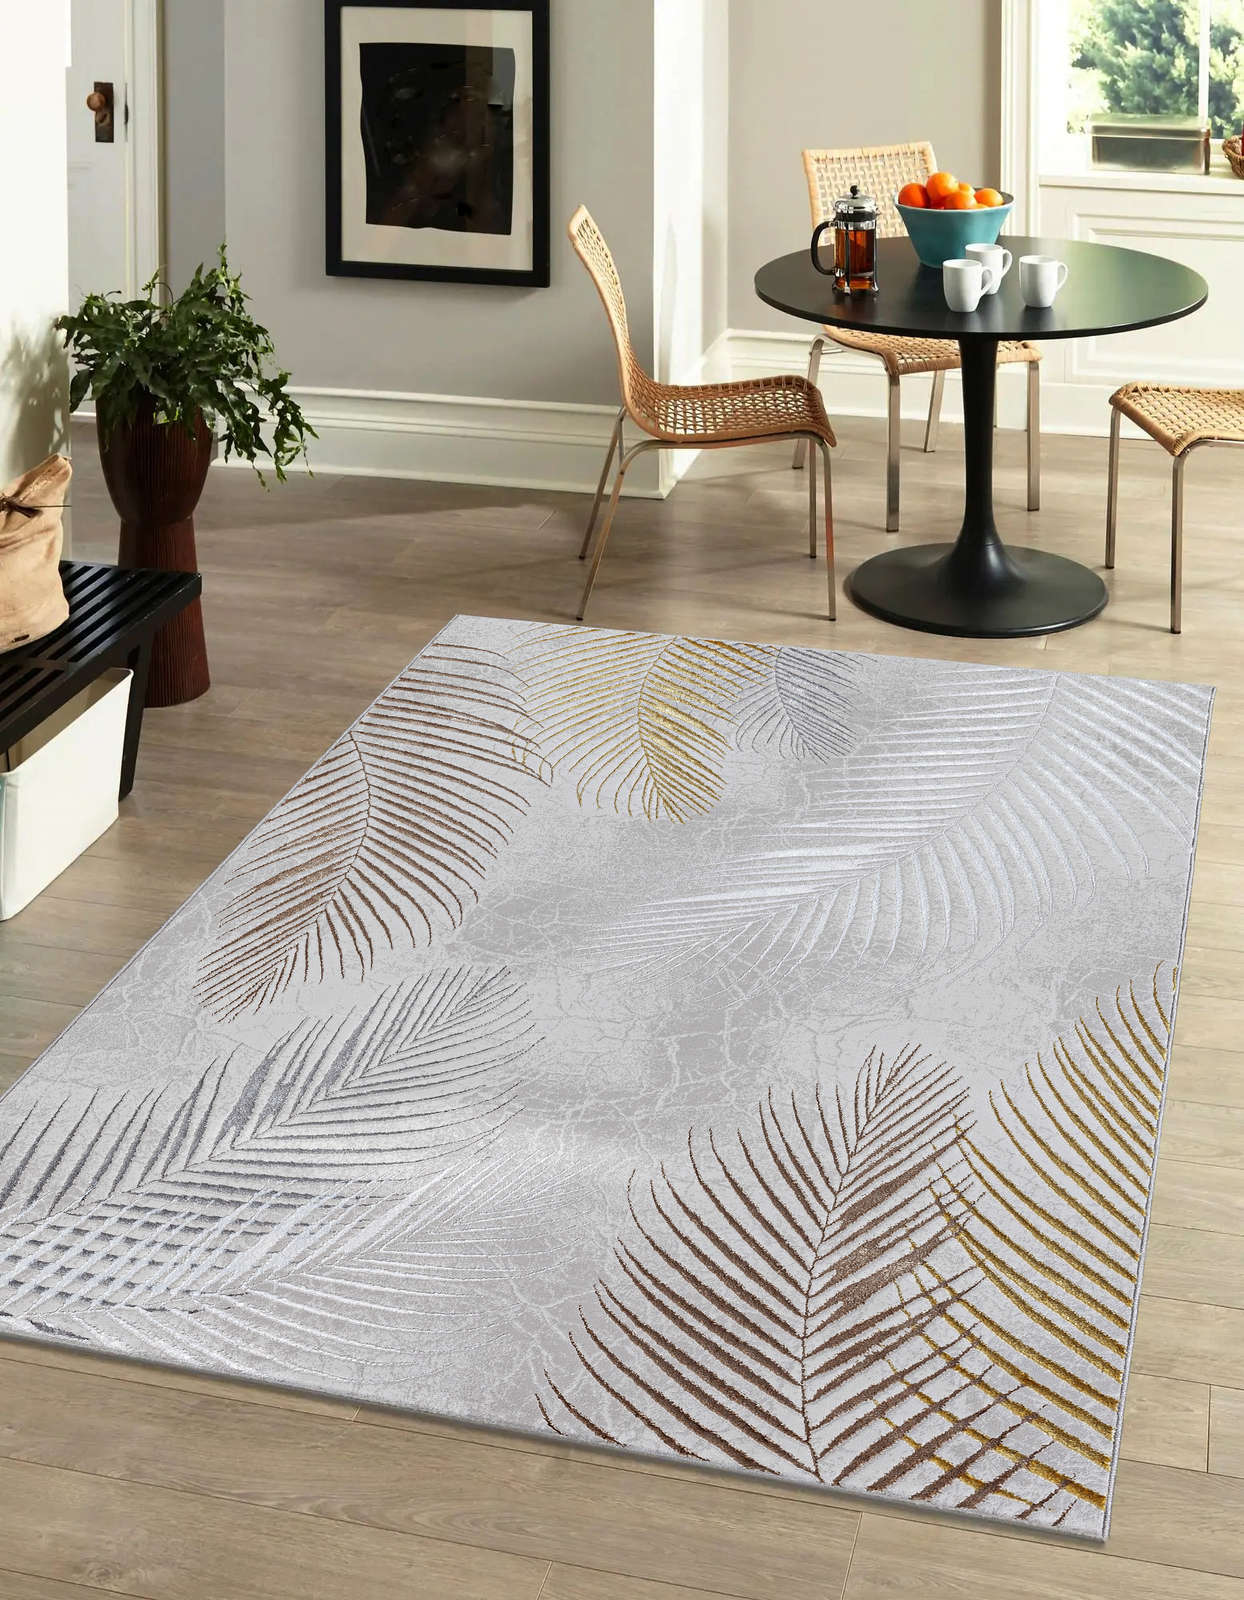             Cuddly soft high pile carpet in grey as a runner - 290 x 200 cm
        